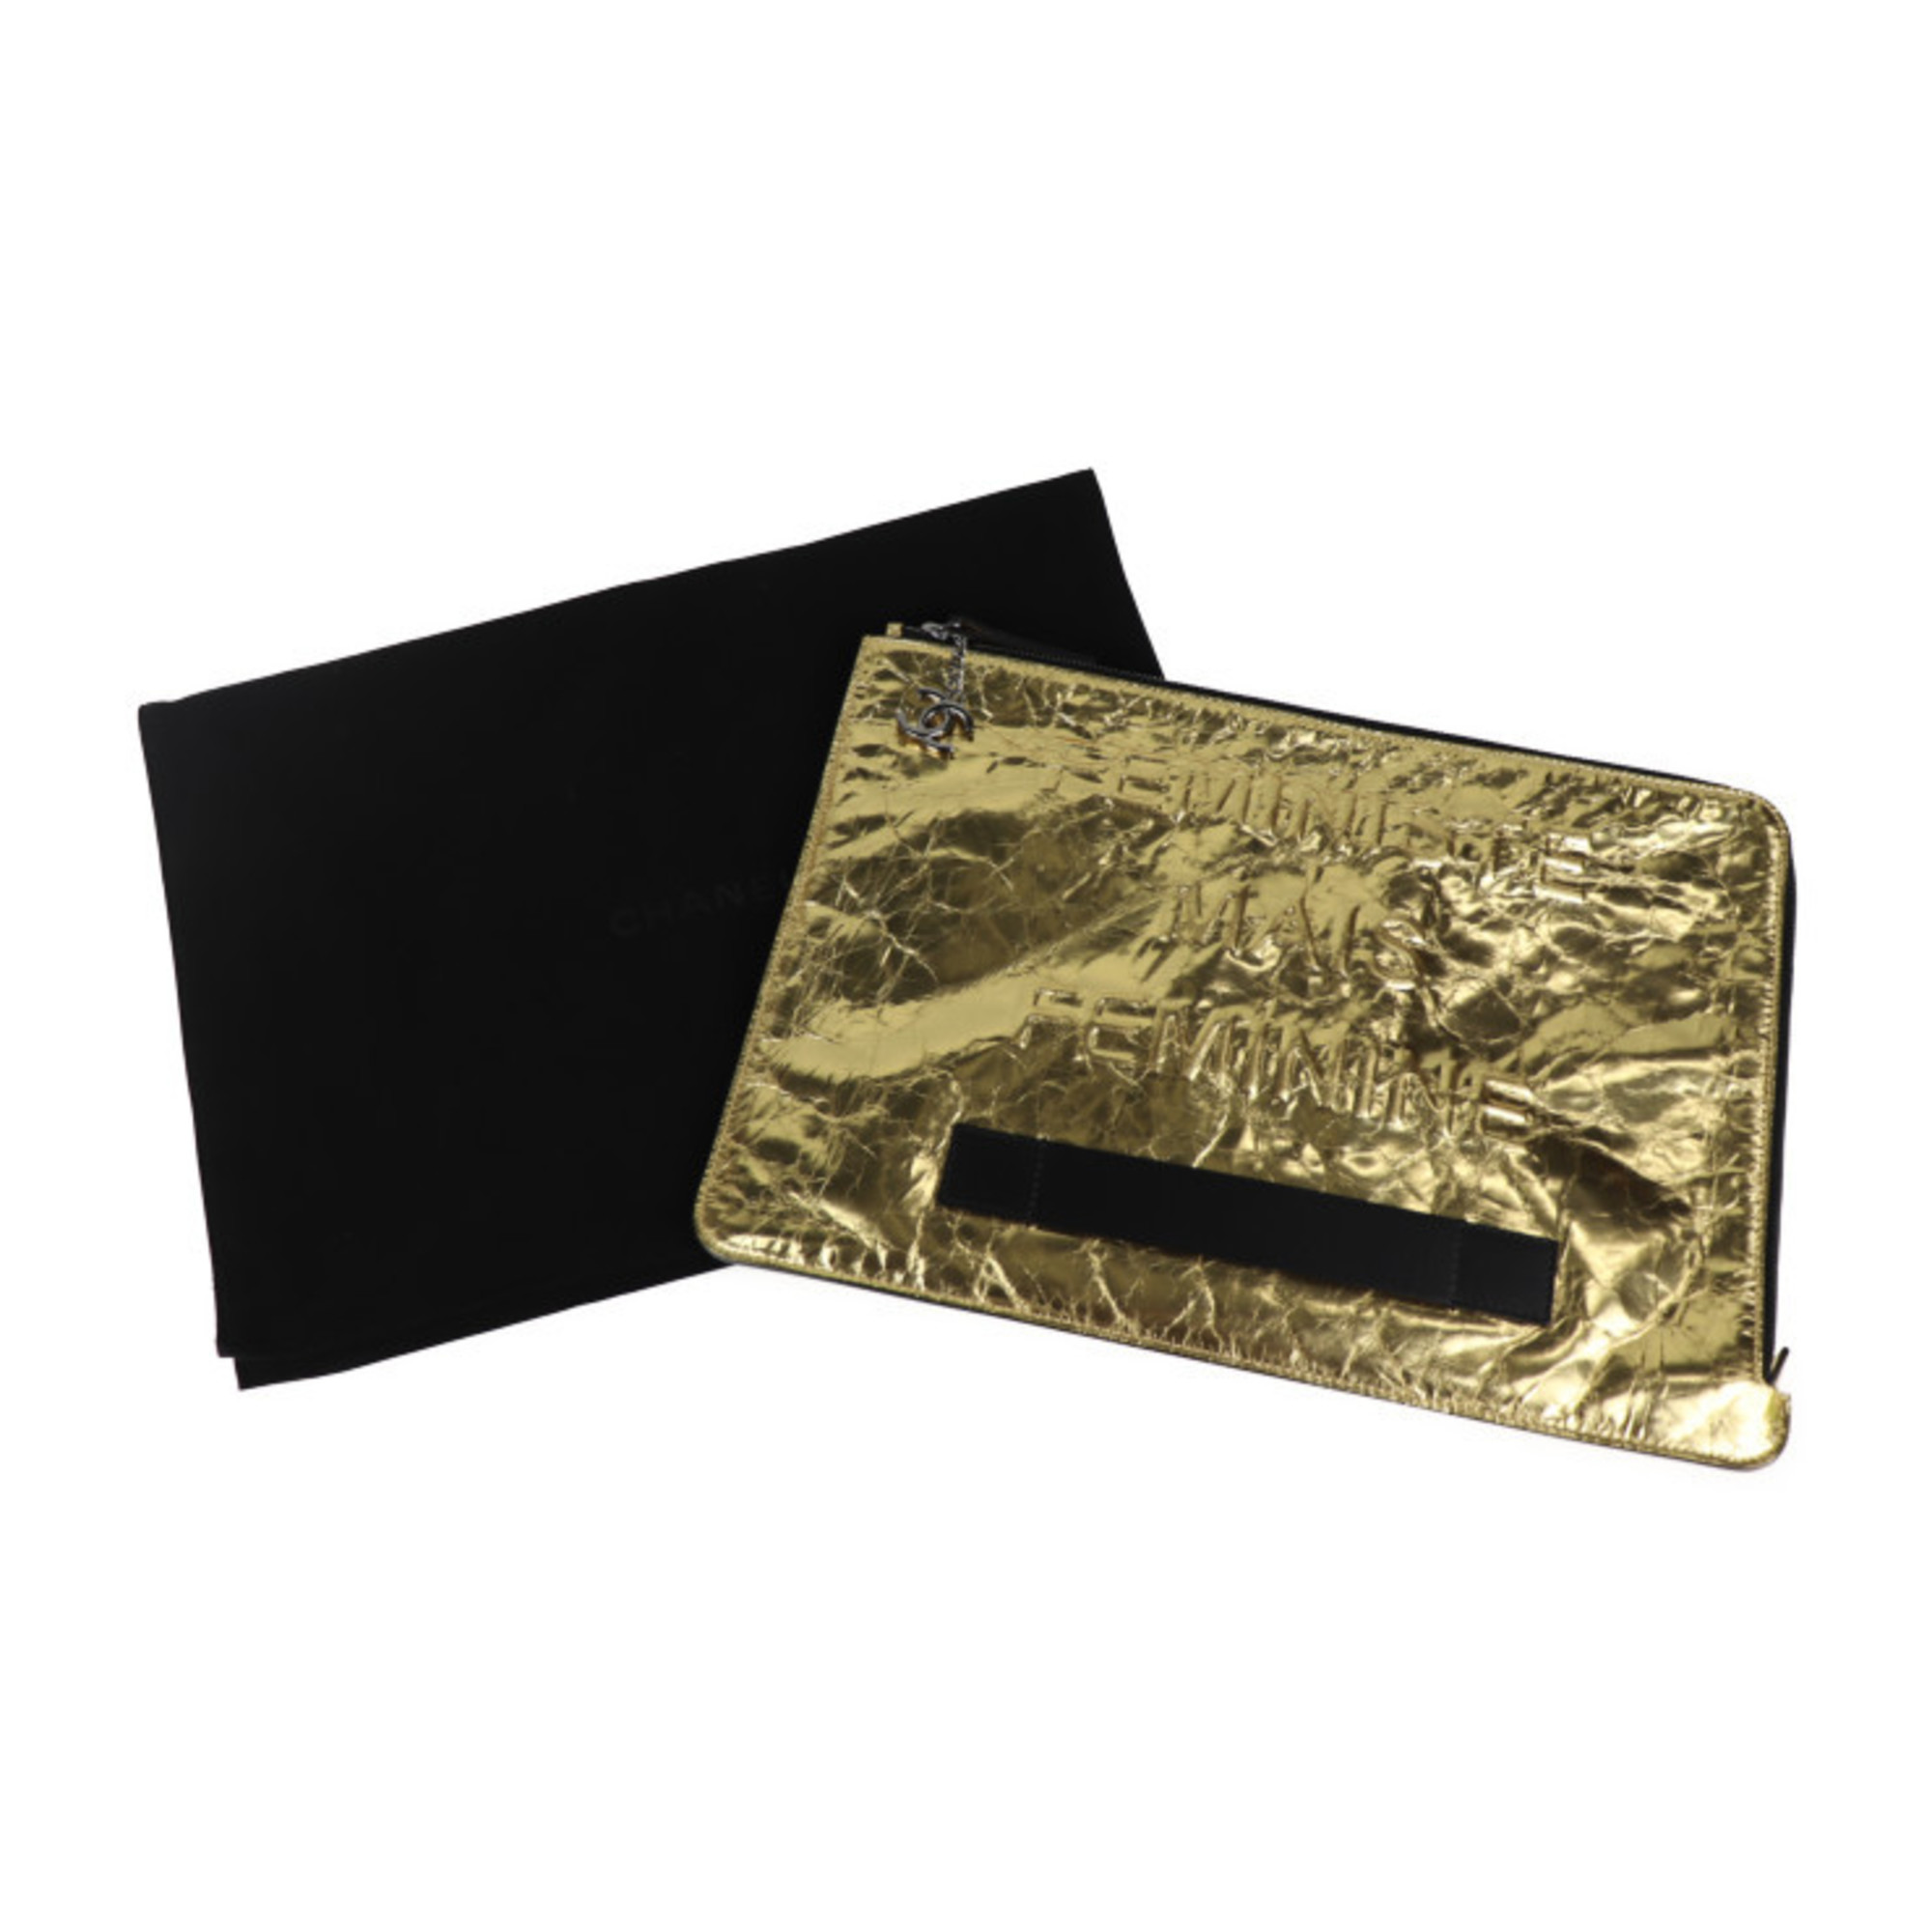 CHANEL Chanel clutch bag A82164 leather gold black second handbag 20 series